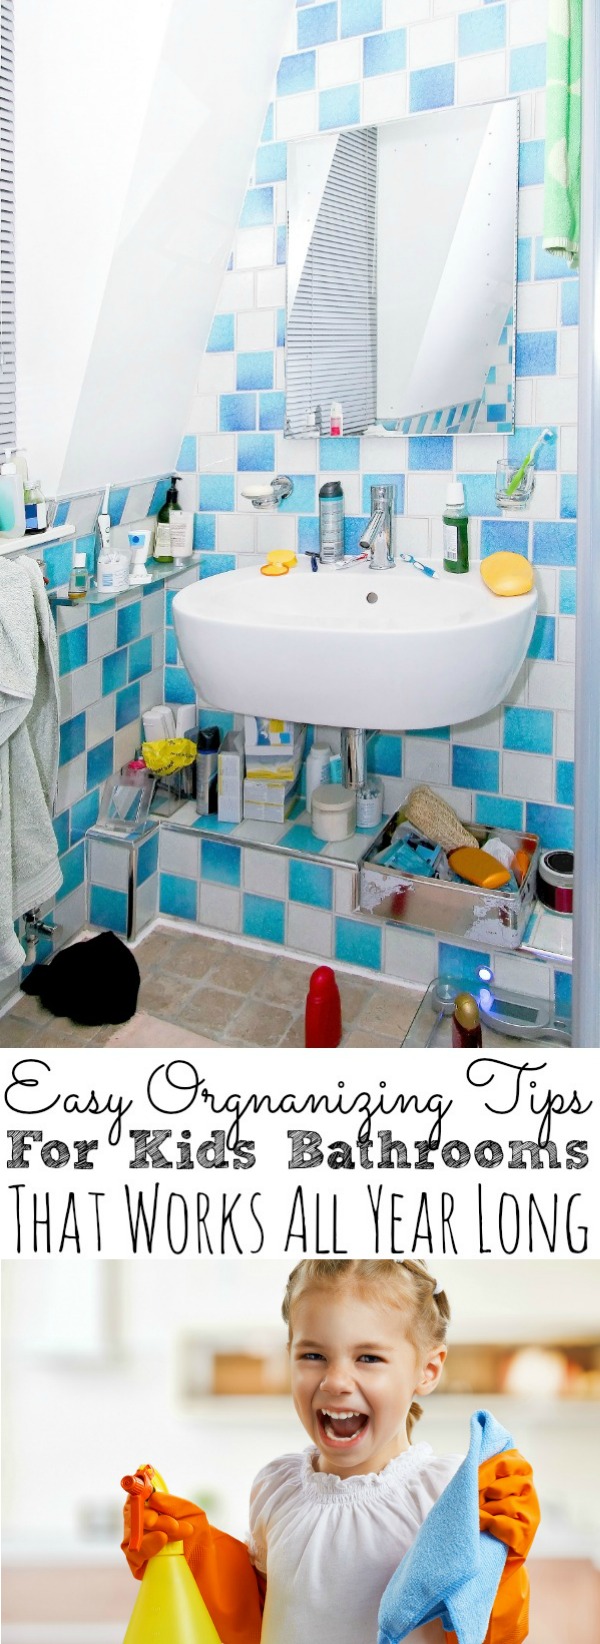 How To Keep The Kids Bathroom Organized